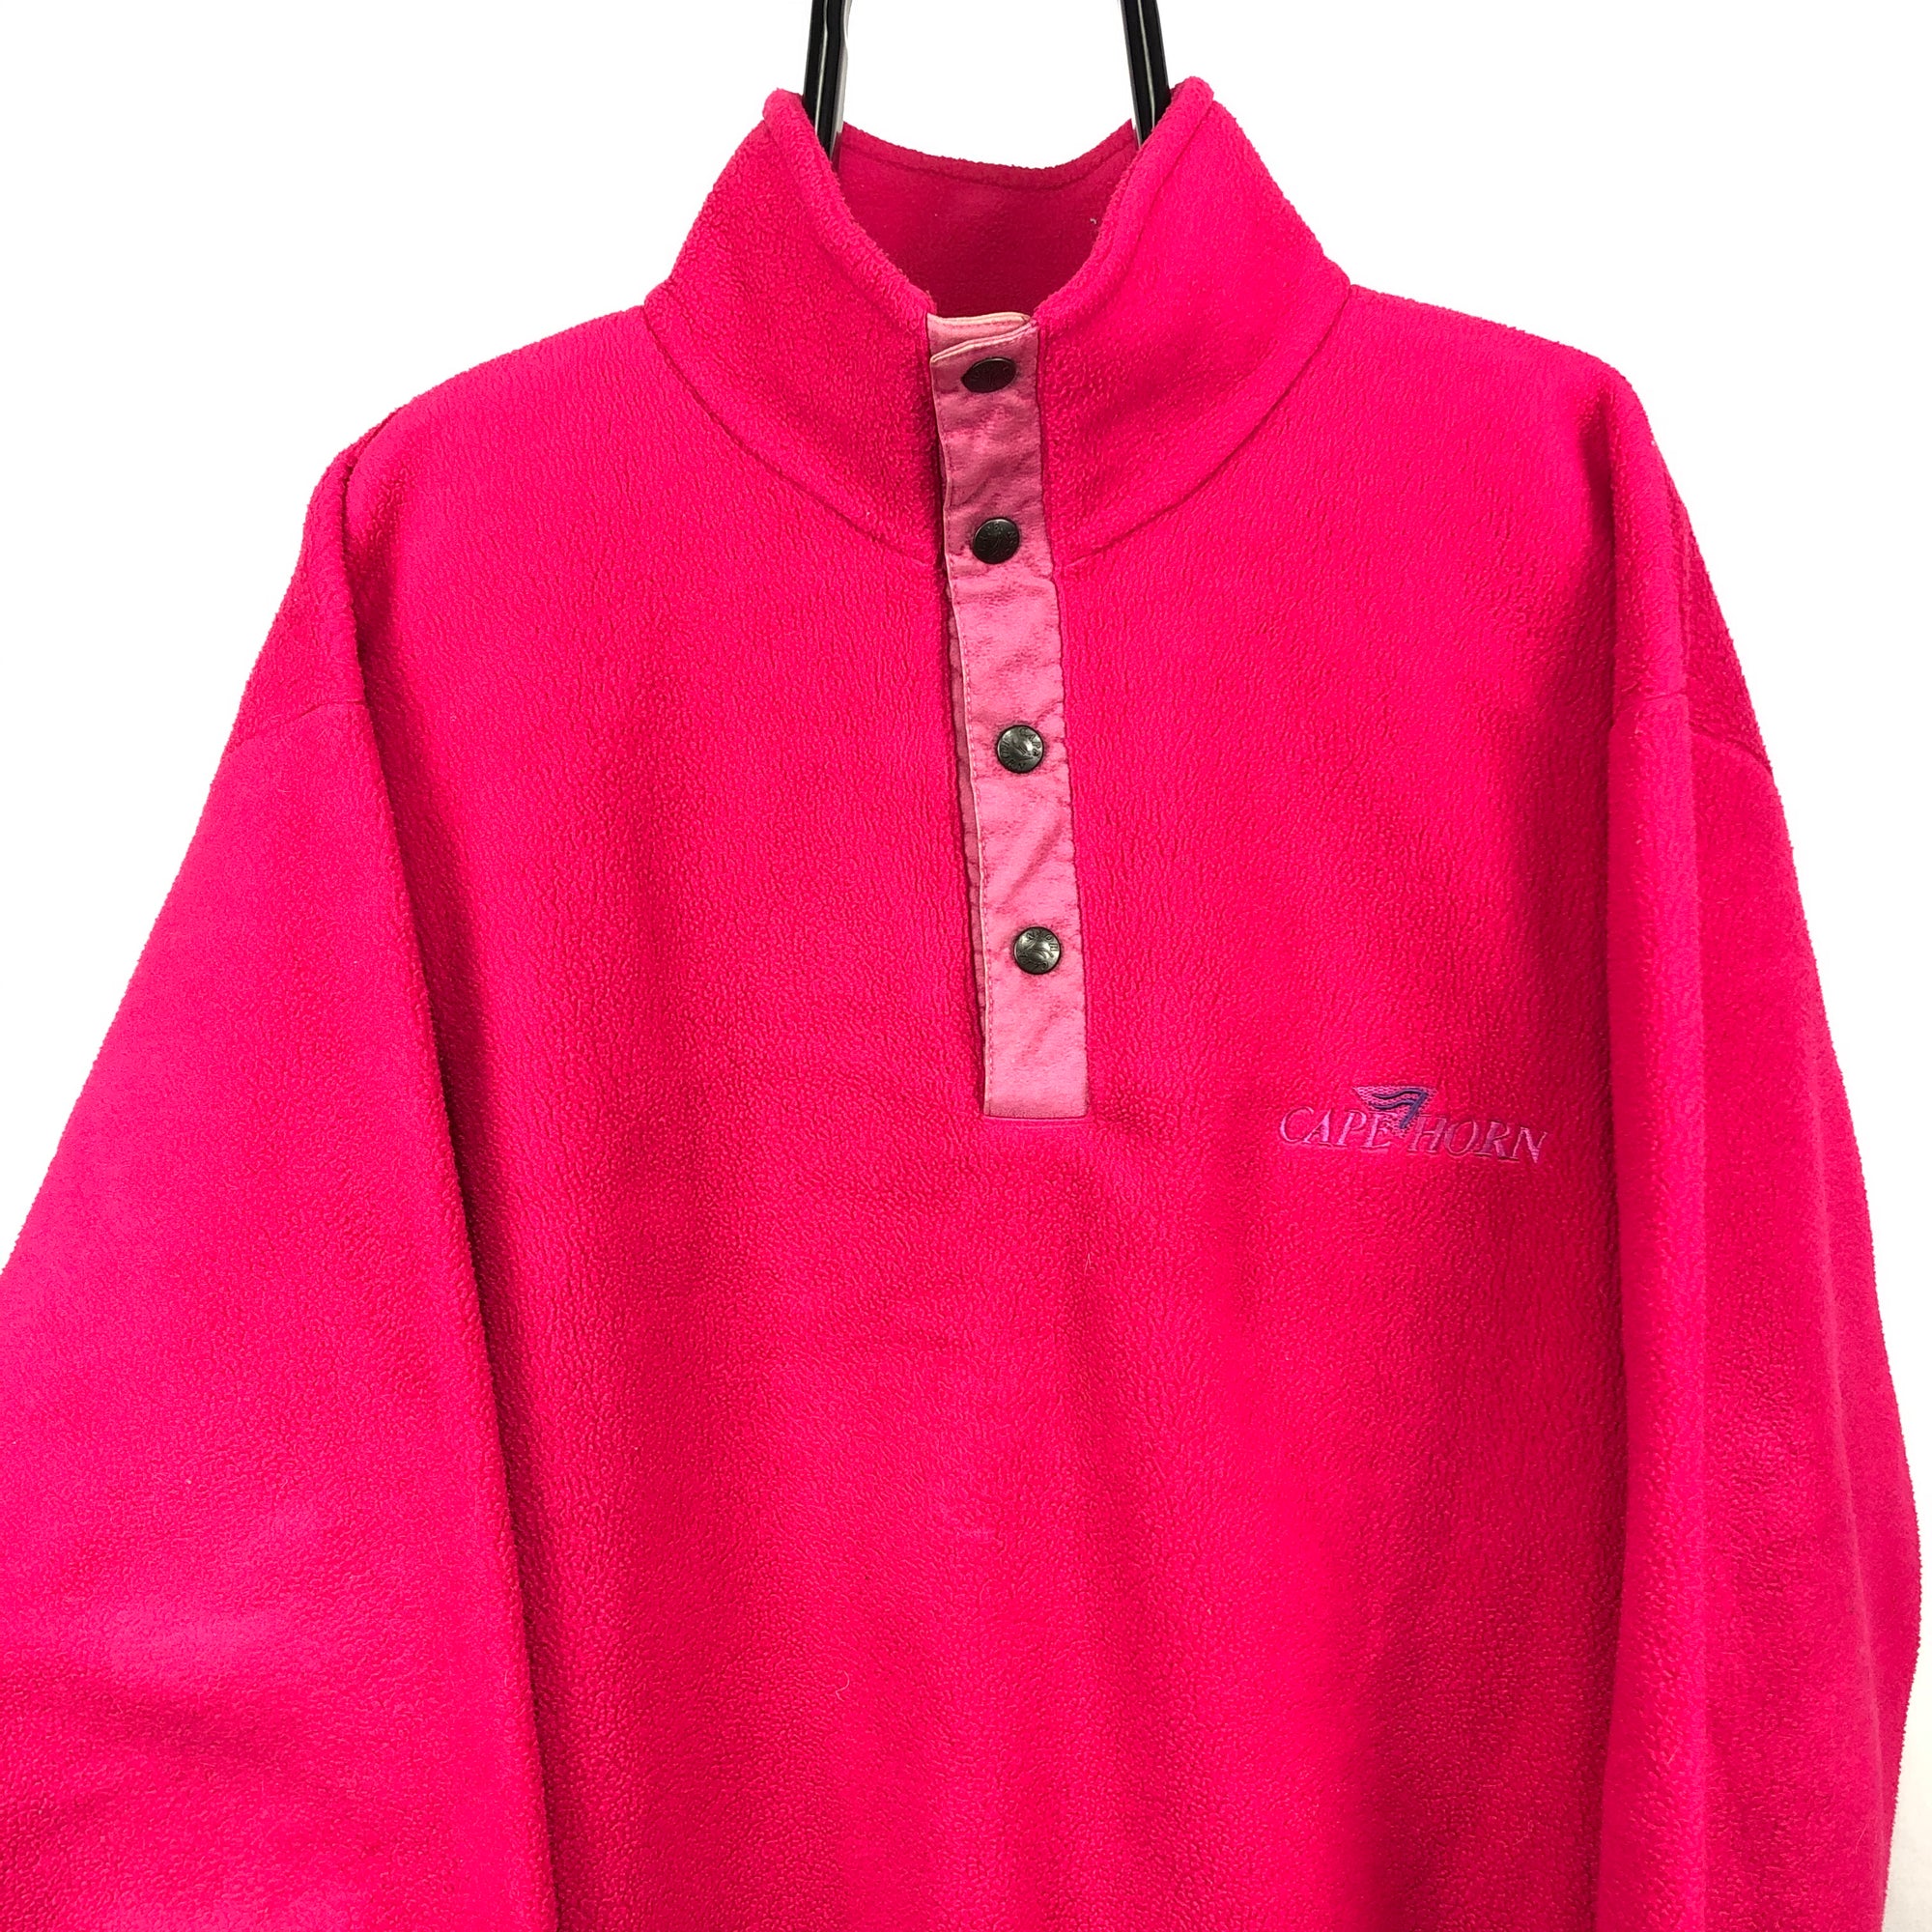 Vintage 'Cape Horn' Button Up Fleece in Hot Pink - Men's Large/Women's XL